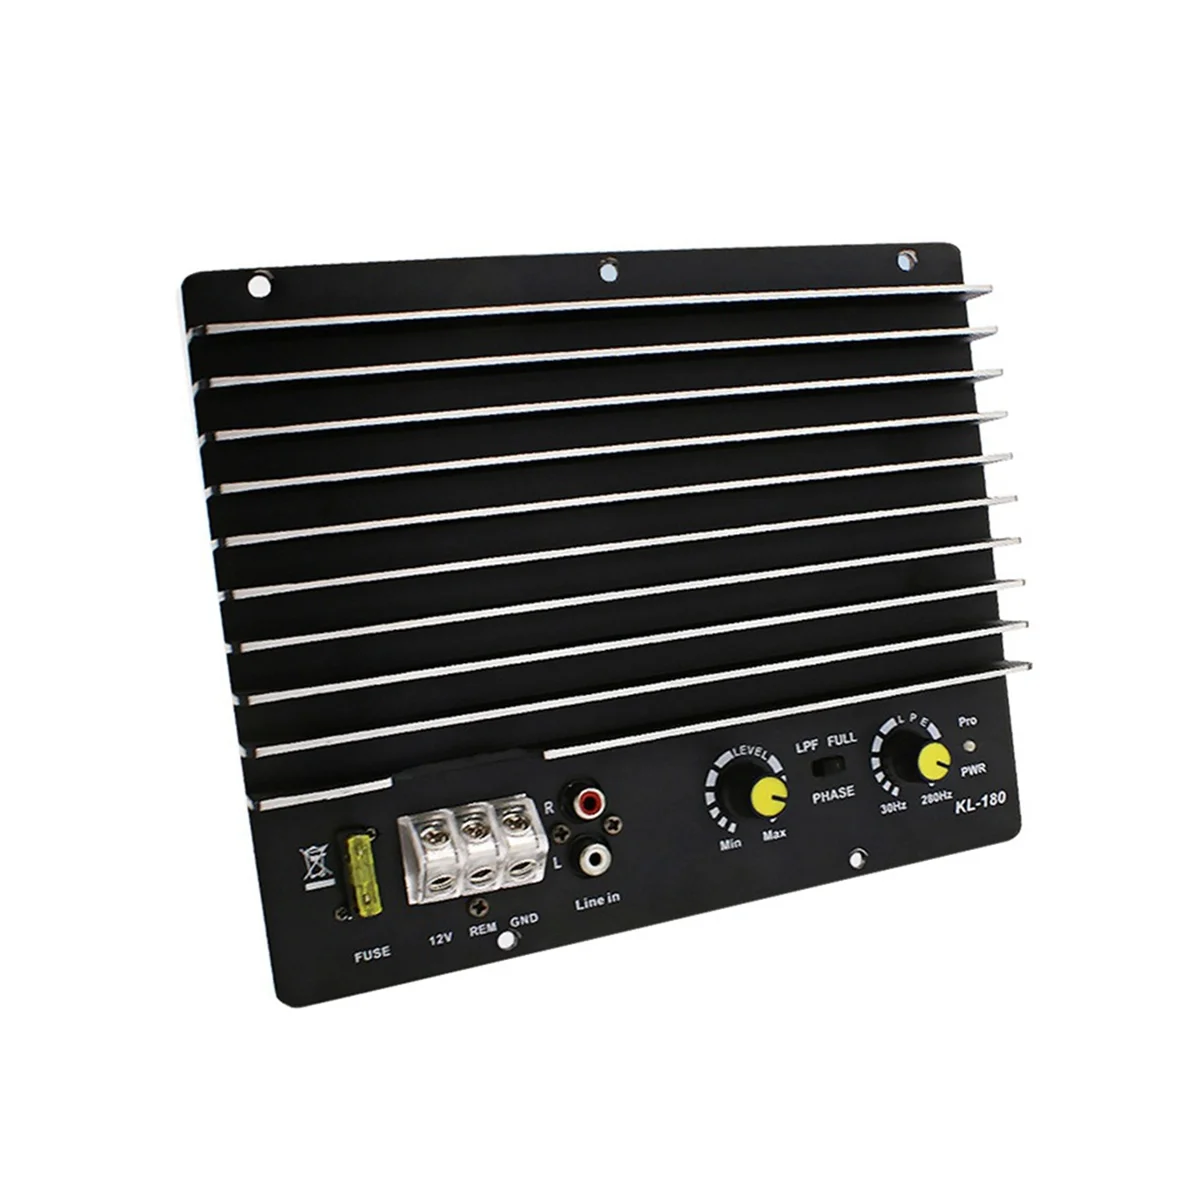 

1000W 12V Car Audio Power Amplifier Subwoofer Amplifier Board Audio DIY Amplifier Board Auto Player Kl-180